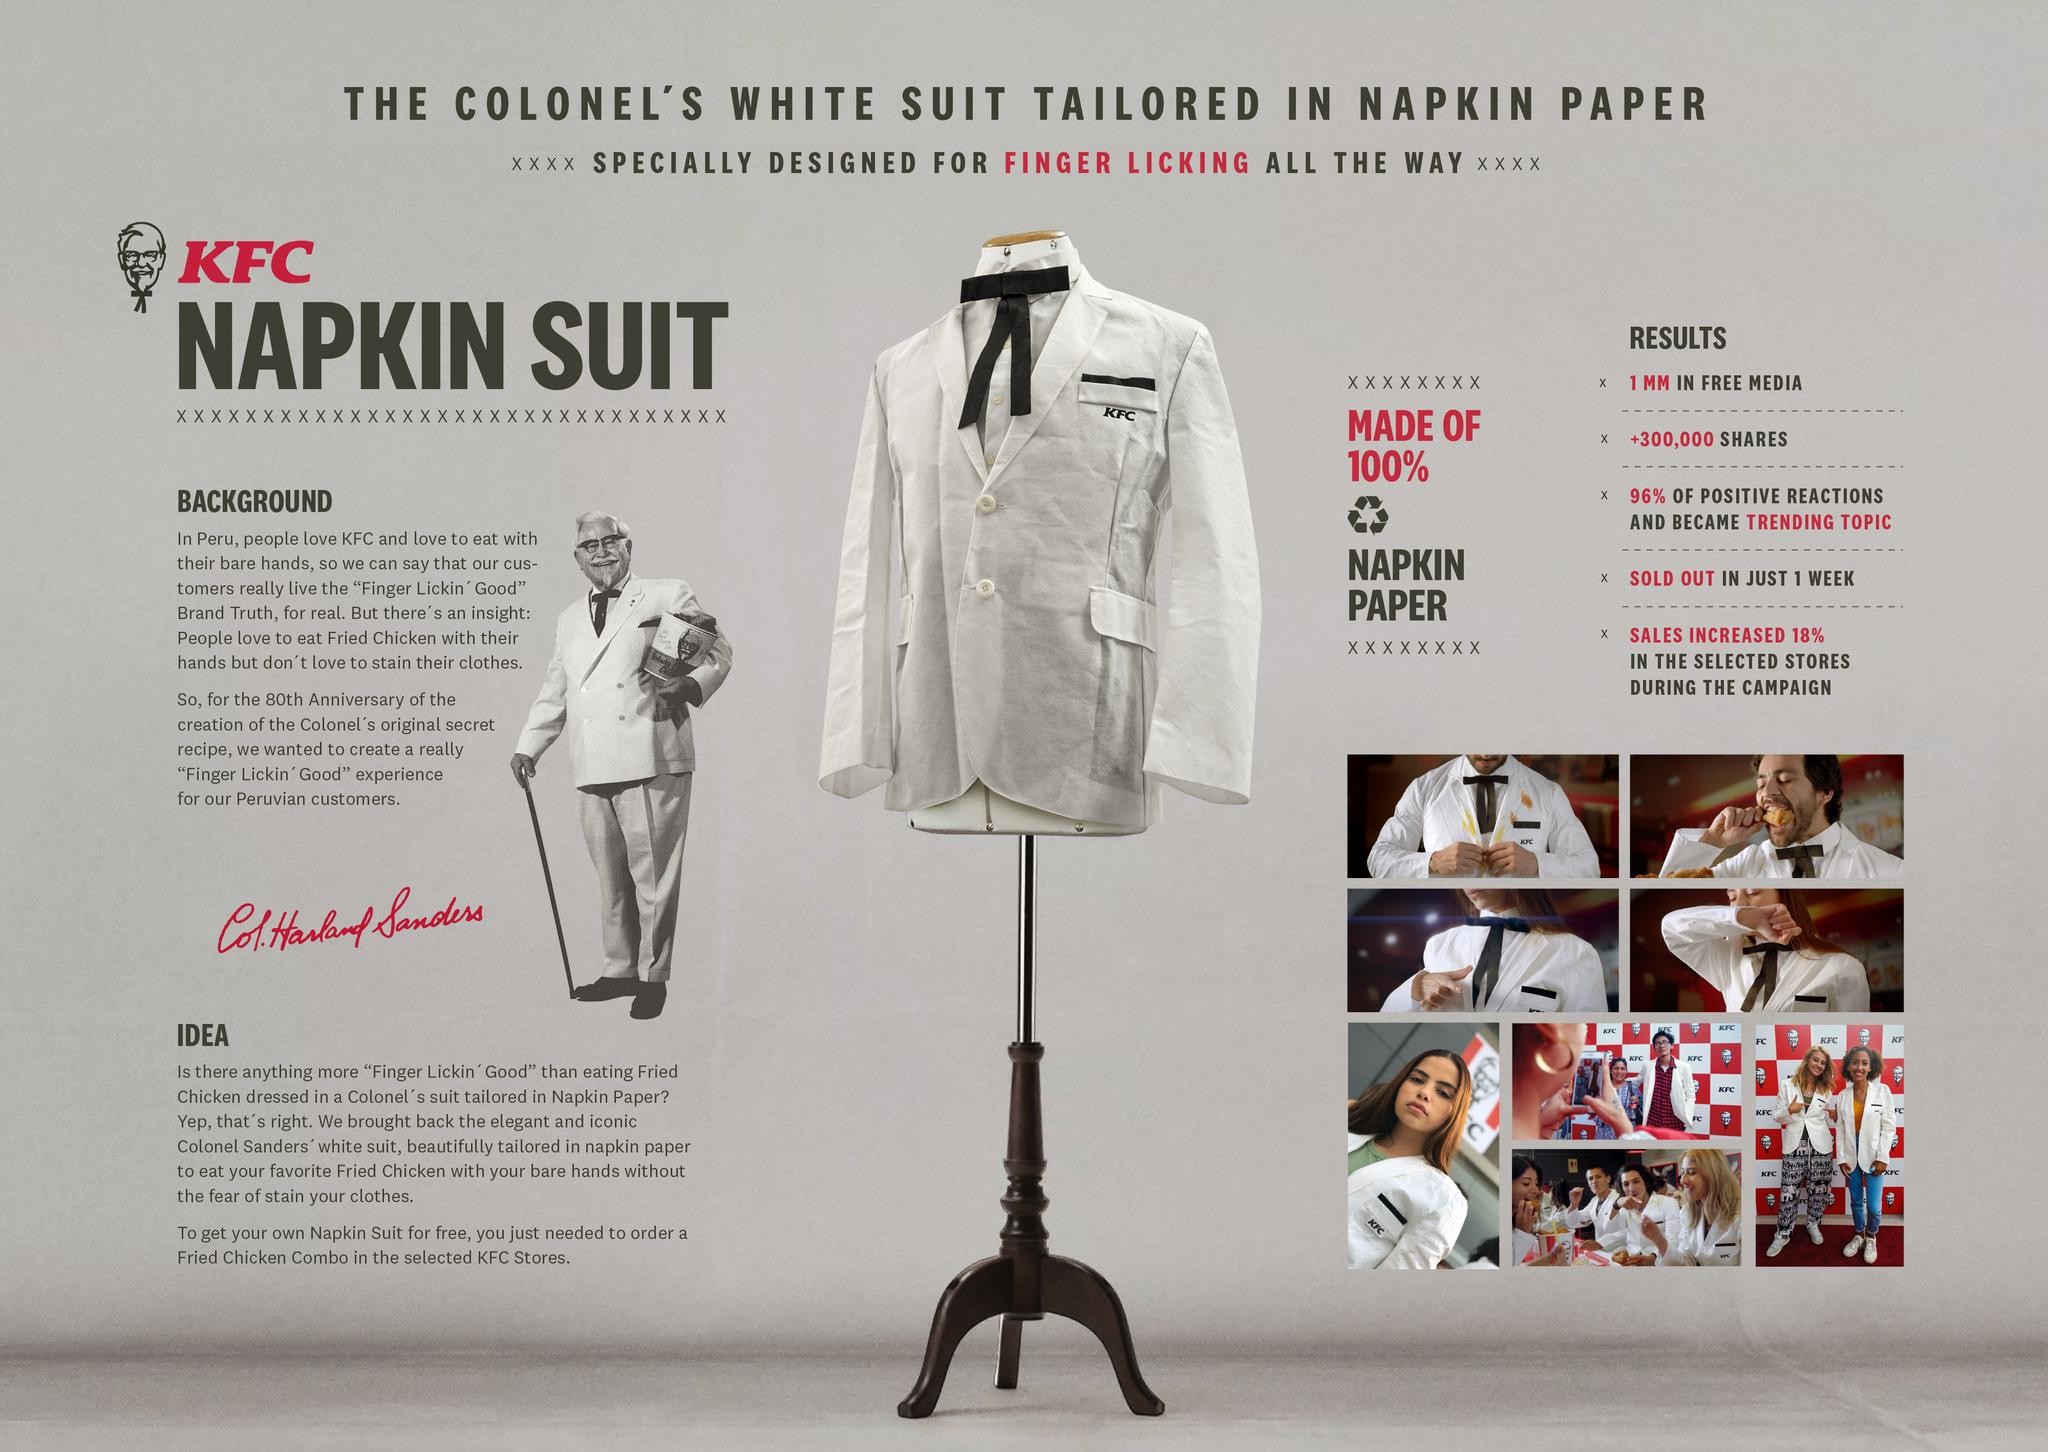 The Napkin Suit